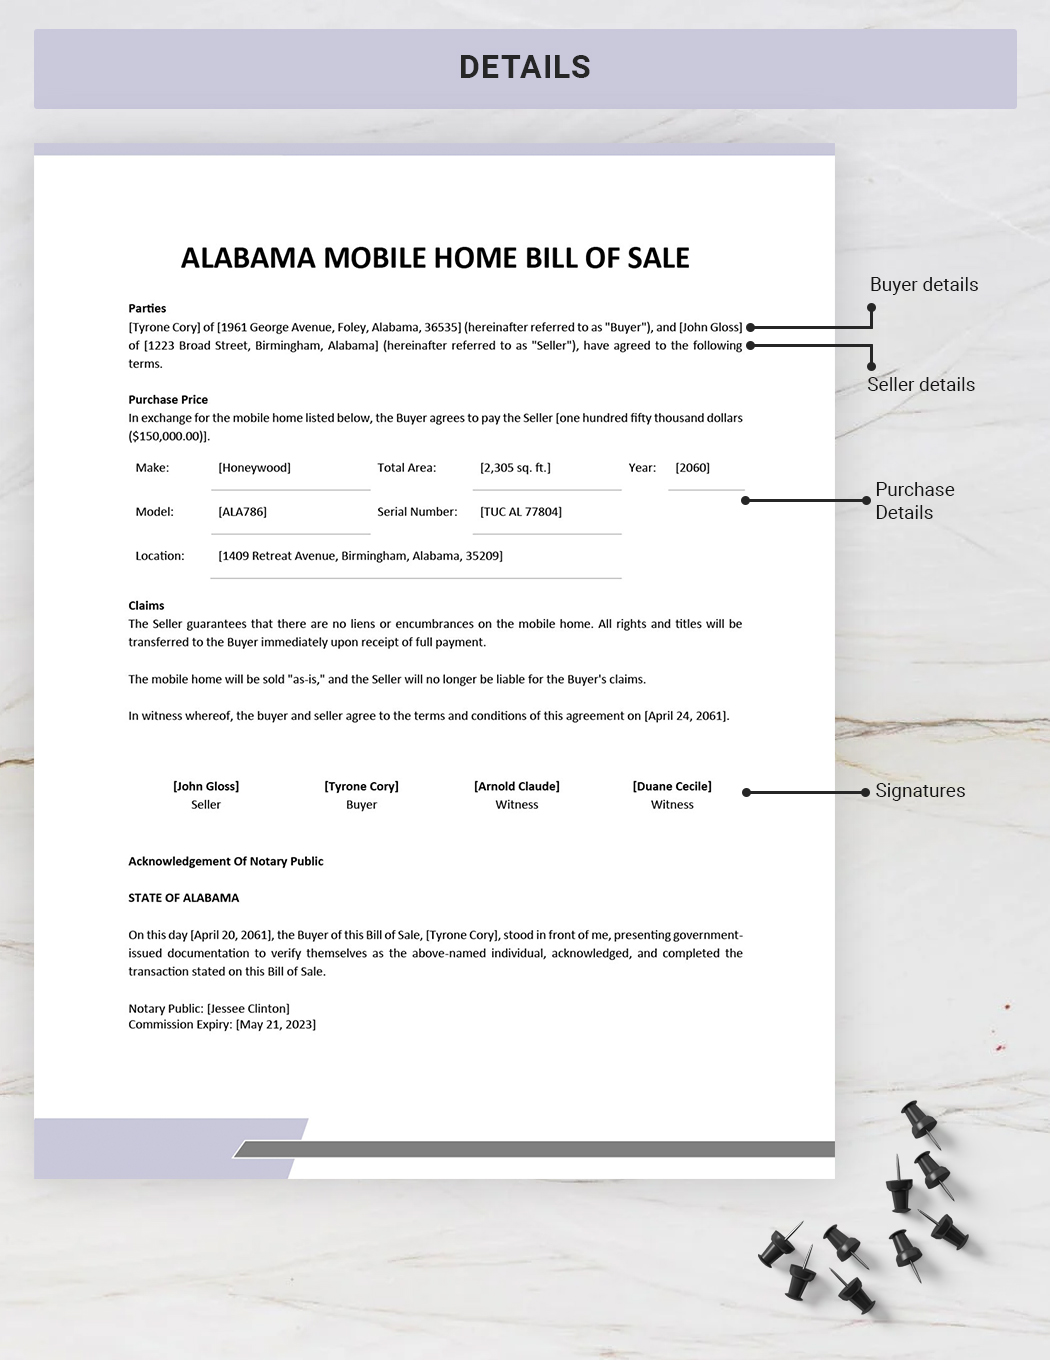 Alabama Mobile Home Bill of Sale Template